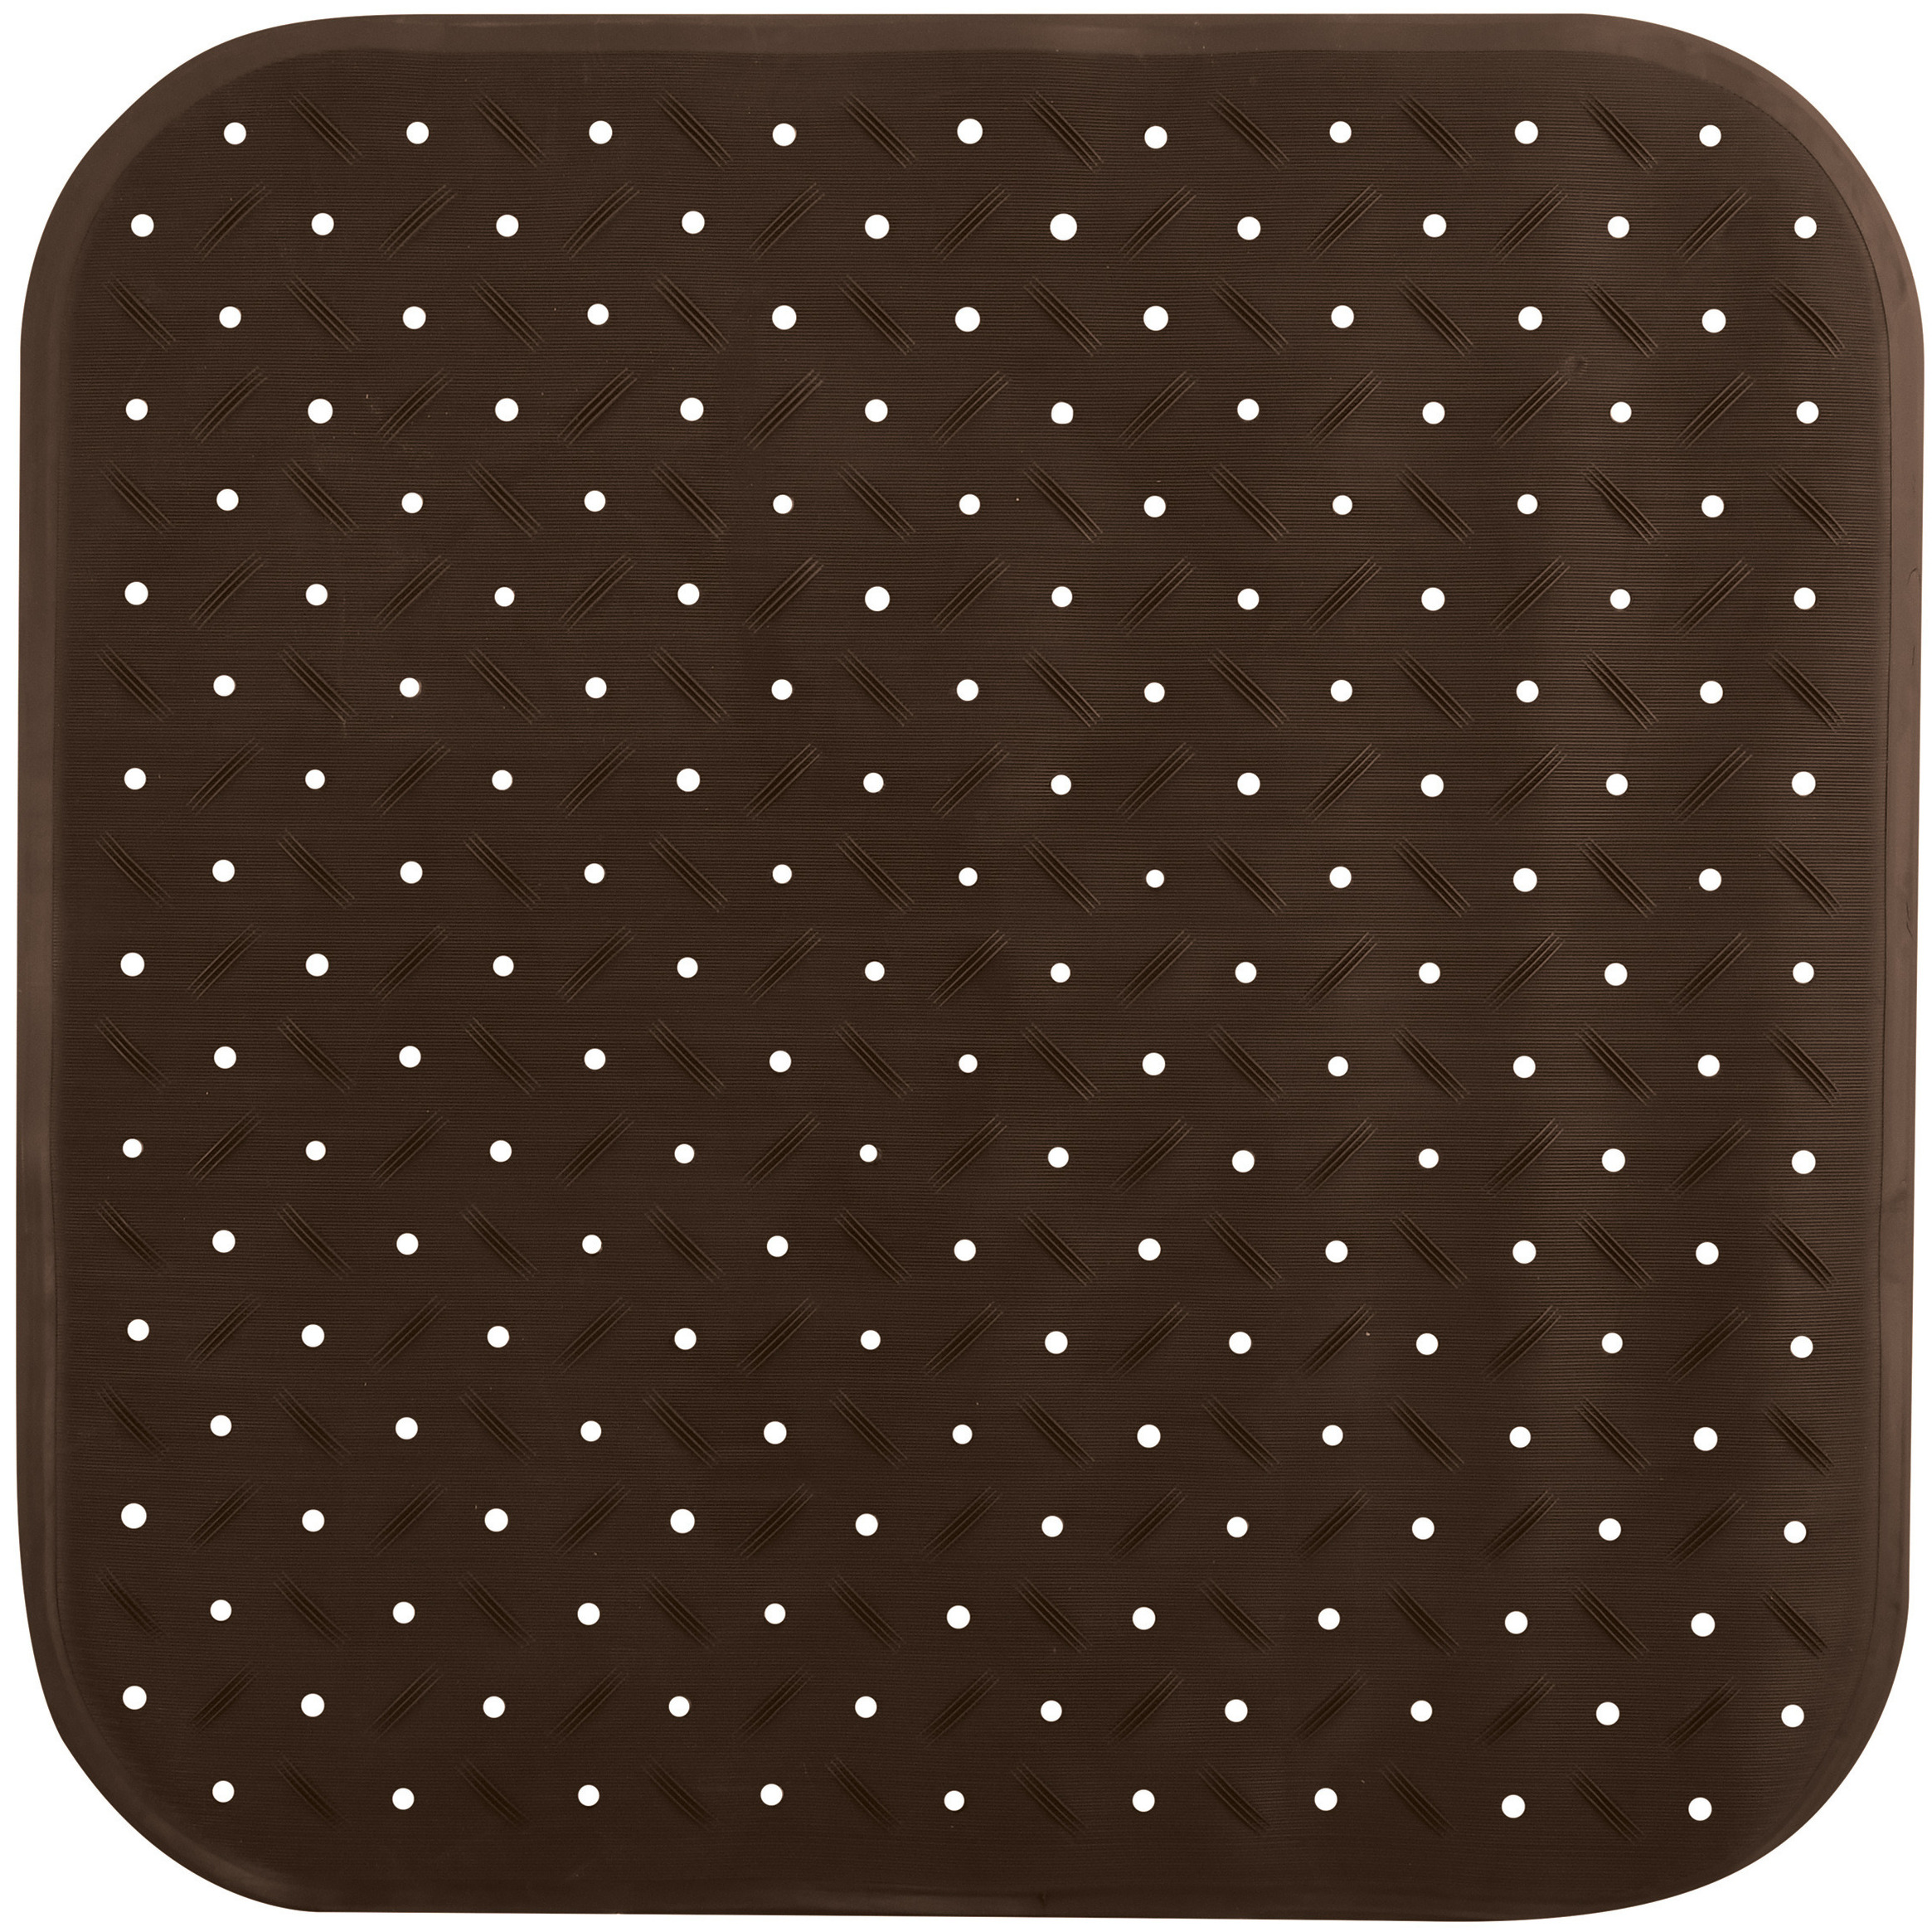 Douche-bad anti-slip mat badkamer rubber bruin 54 x 54 cm vierkant